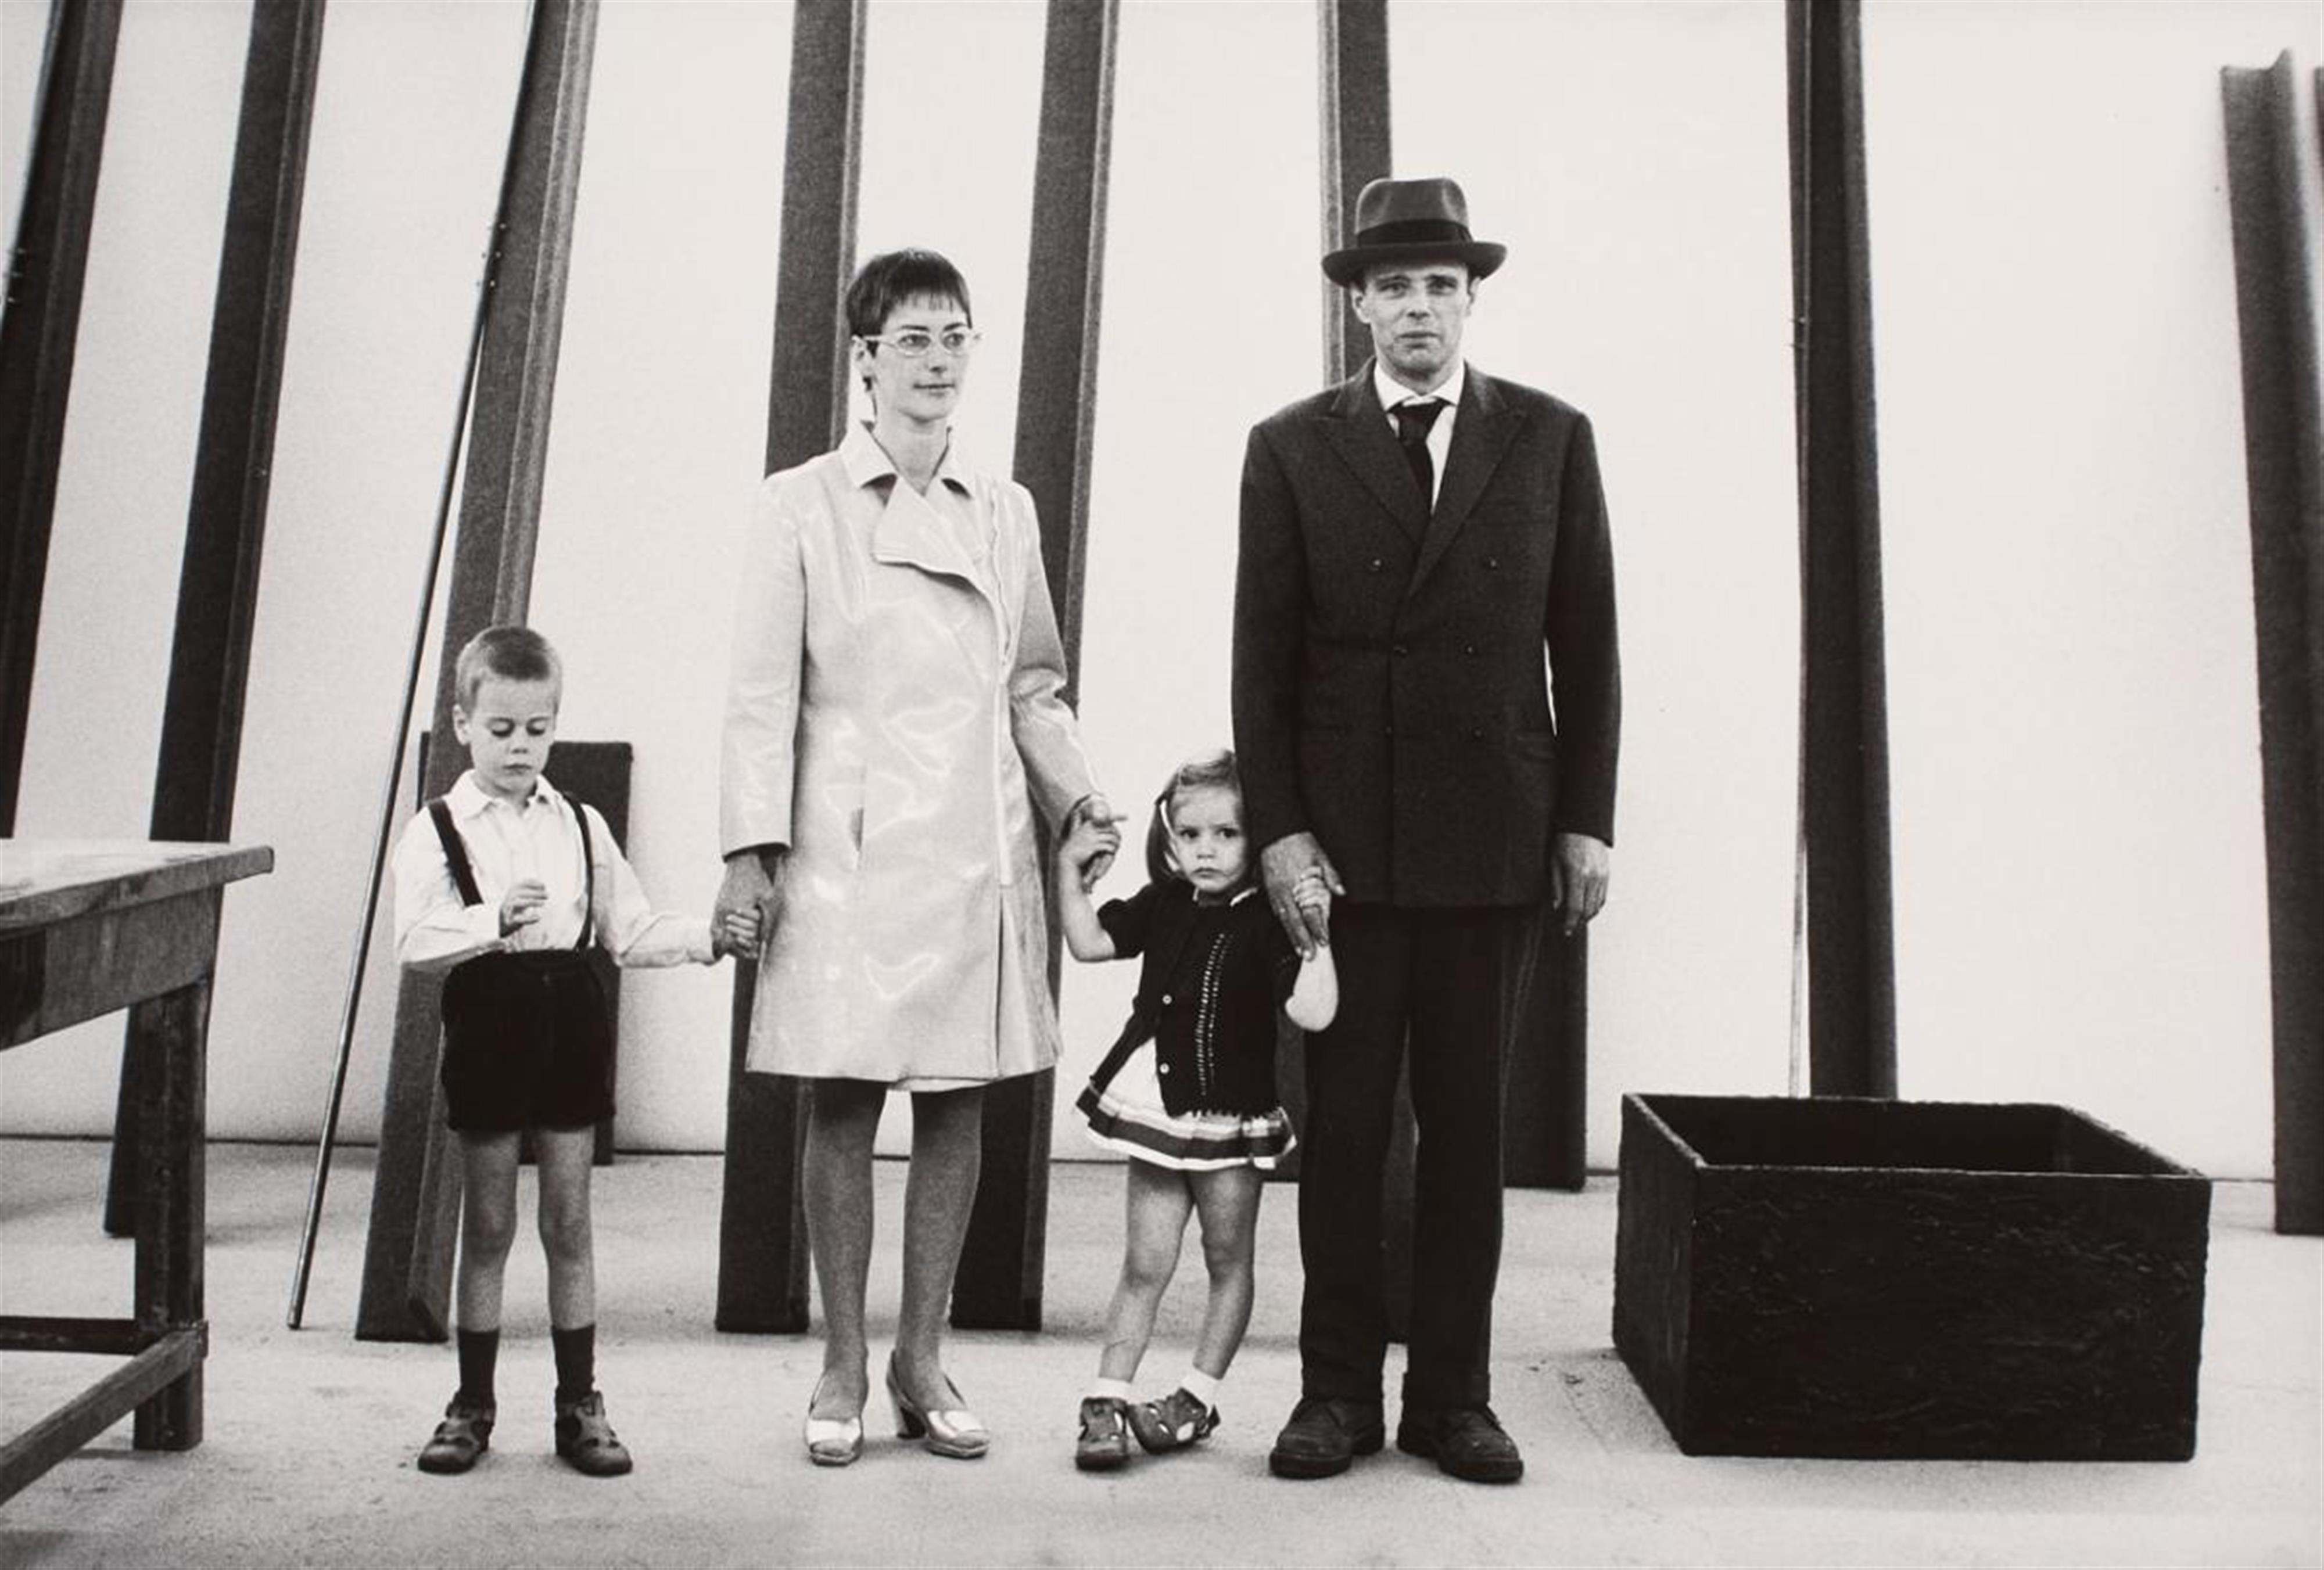 Robert Lebeck - Joseph Beuys und Familie auf der Documenta in Kassel (Joseph Beuys and his family at Documenta in Kassel) - image-1